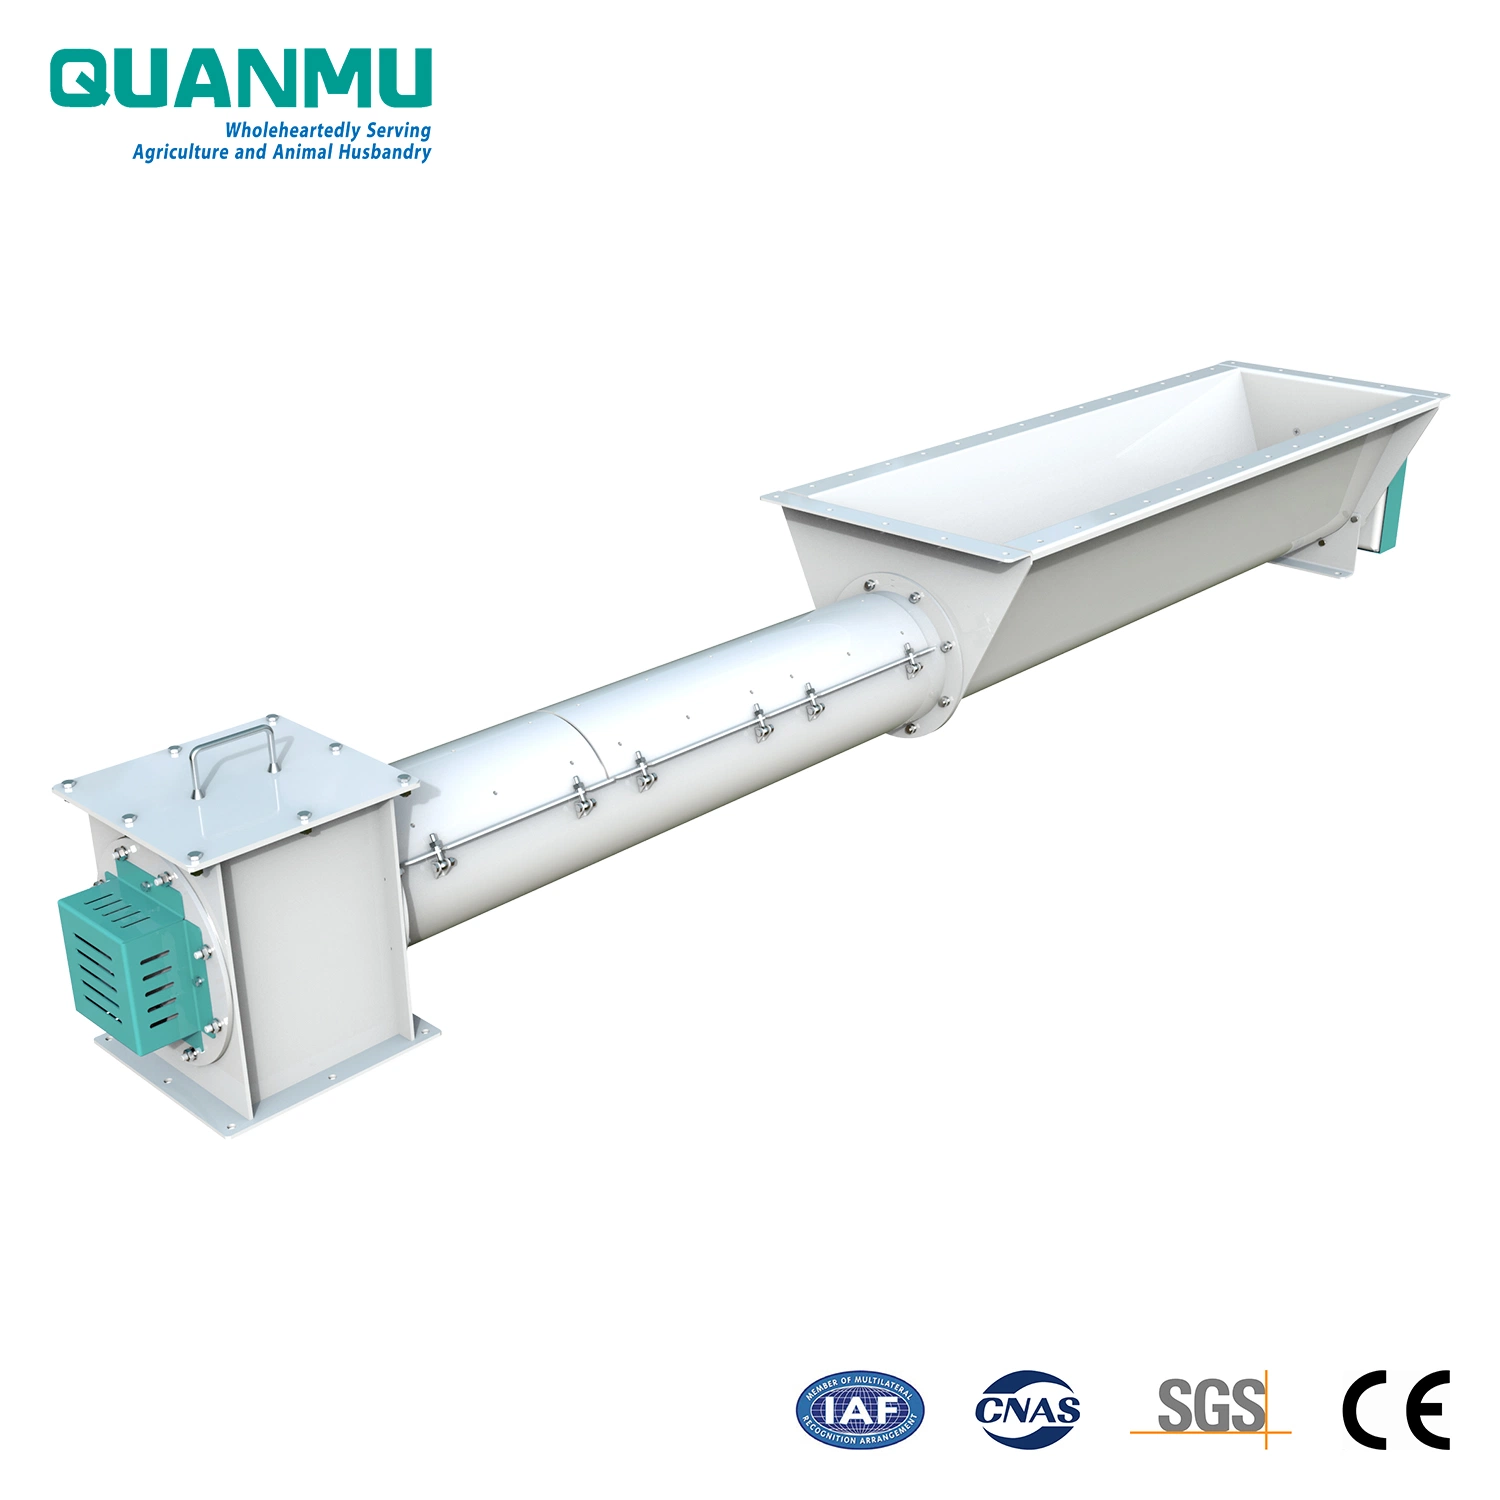 Pig and Livestock Animal Feed Powder or Pellet Material Sealing Tubular (Pipe) Screw Conveyor in Conveying Machine